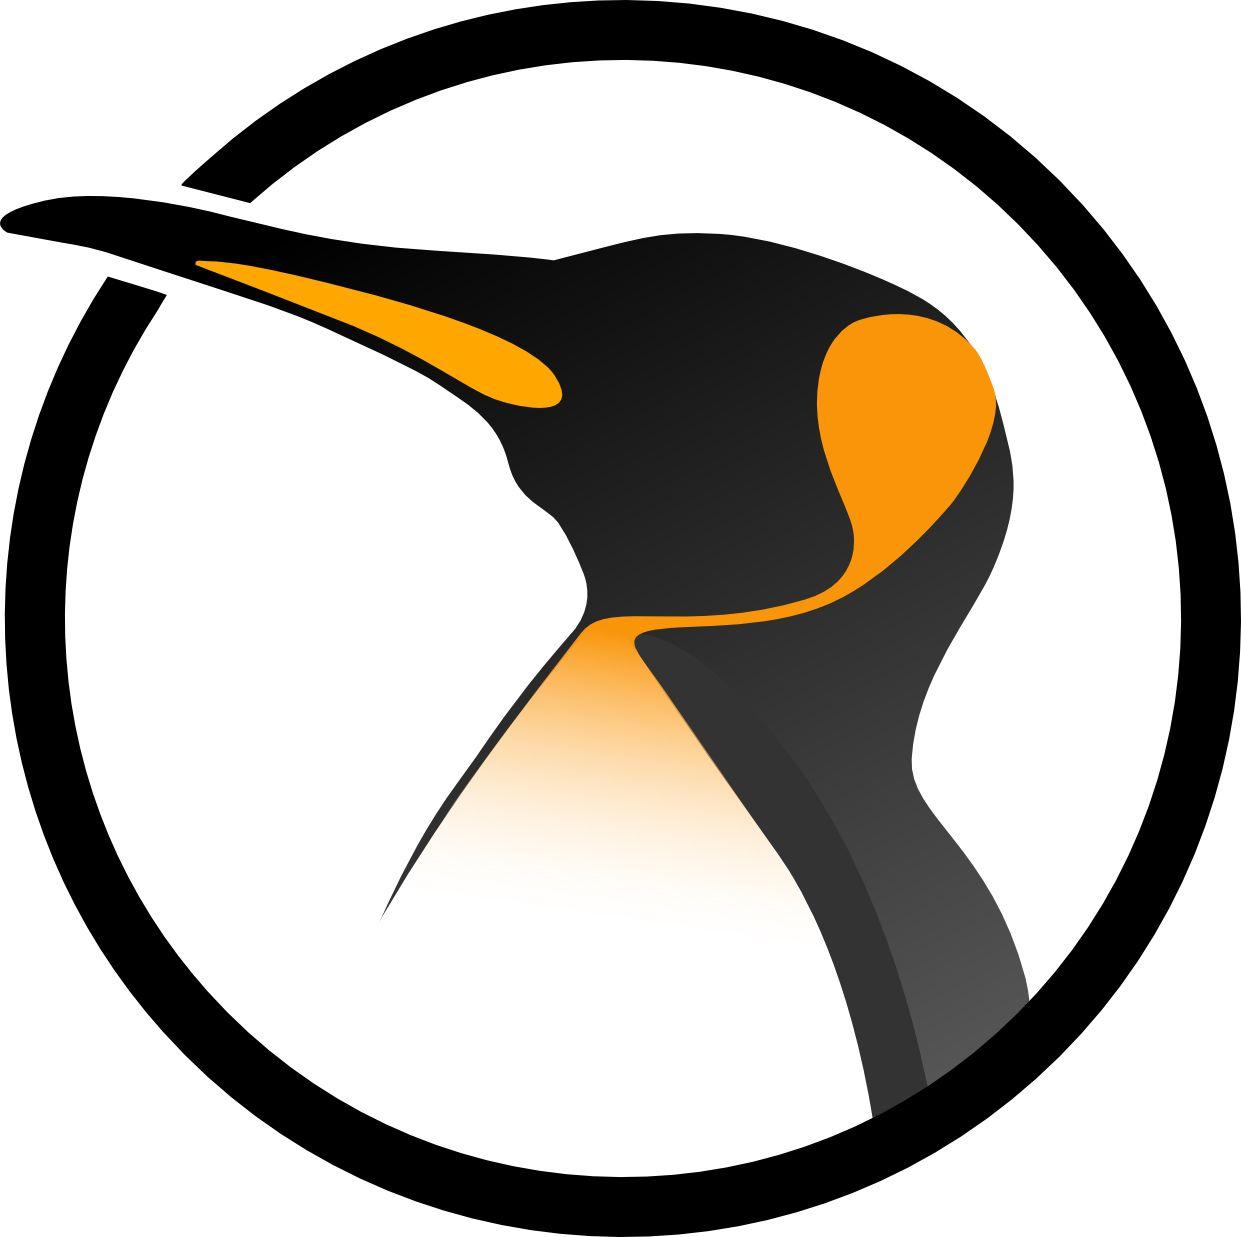 Linux Penguin Logo - Linux Logo, Linux Symbol Meaning, History and Evolution